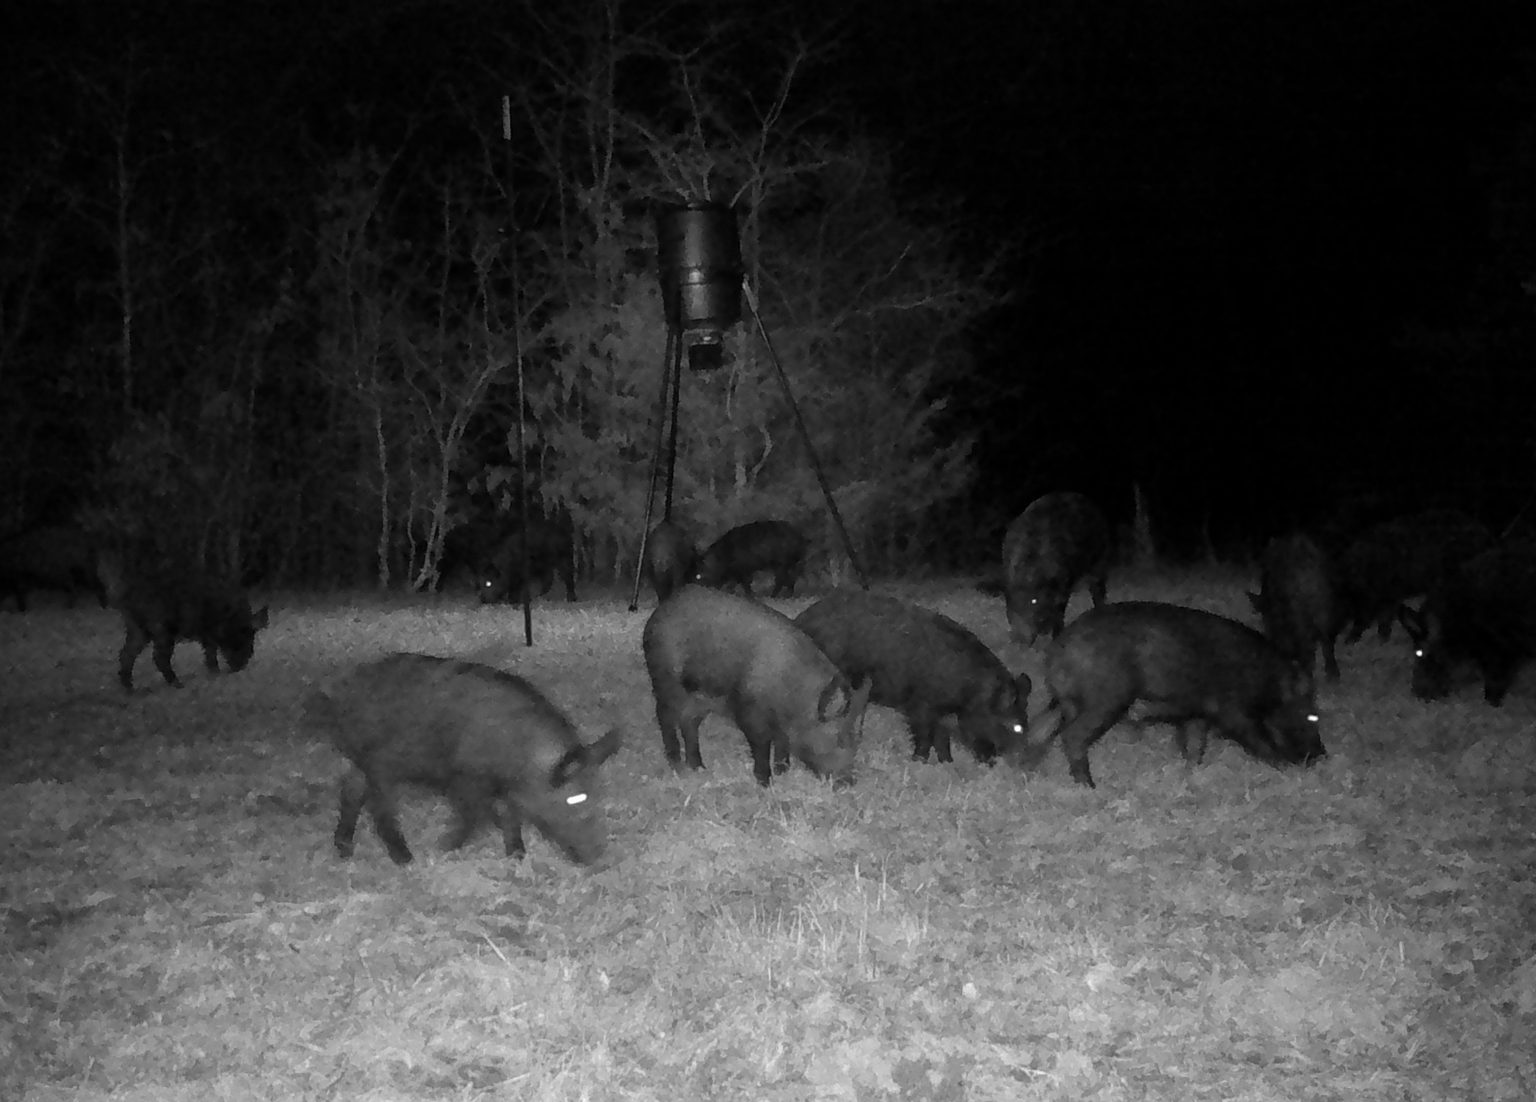 Free Range Texas Hog Hunting Location 85 miles East of Dallas